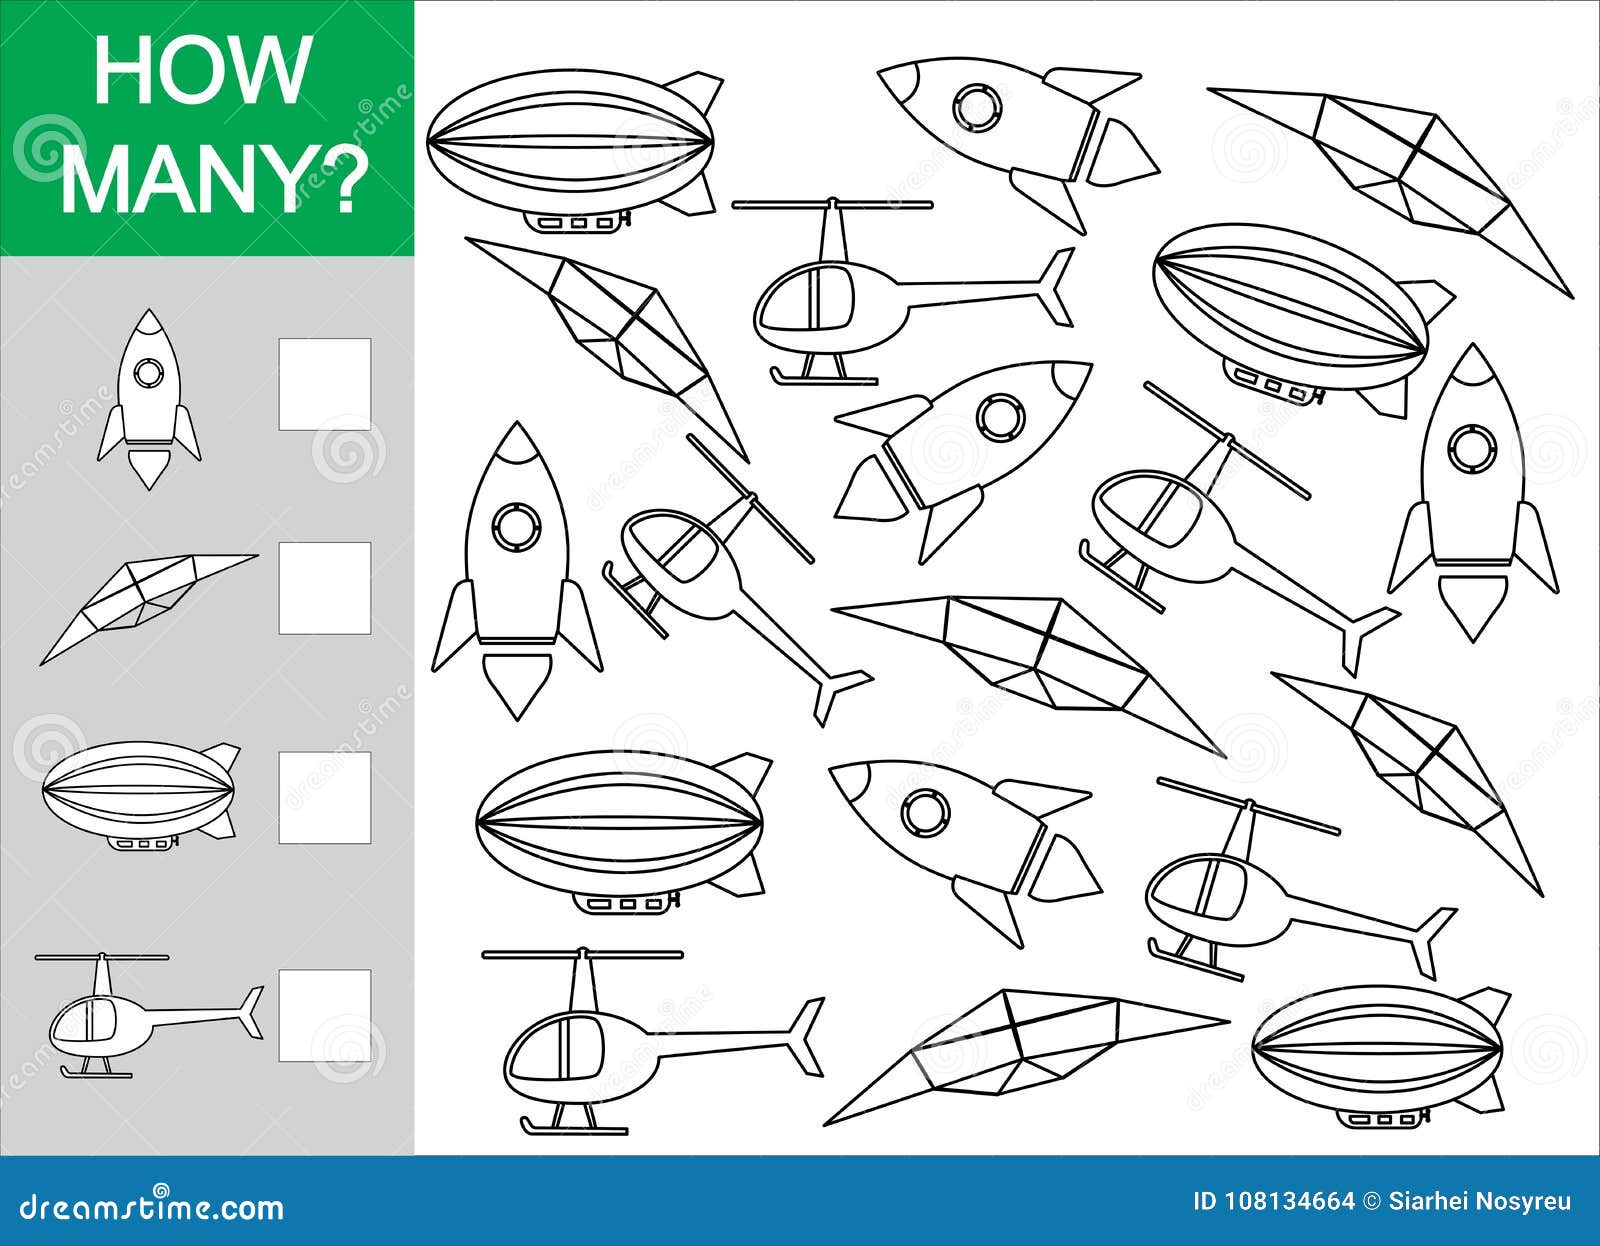 Airplanes, space shuttle, hot air balloon sketches | Stock vector |  Colourbox